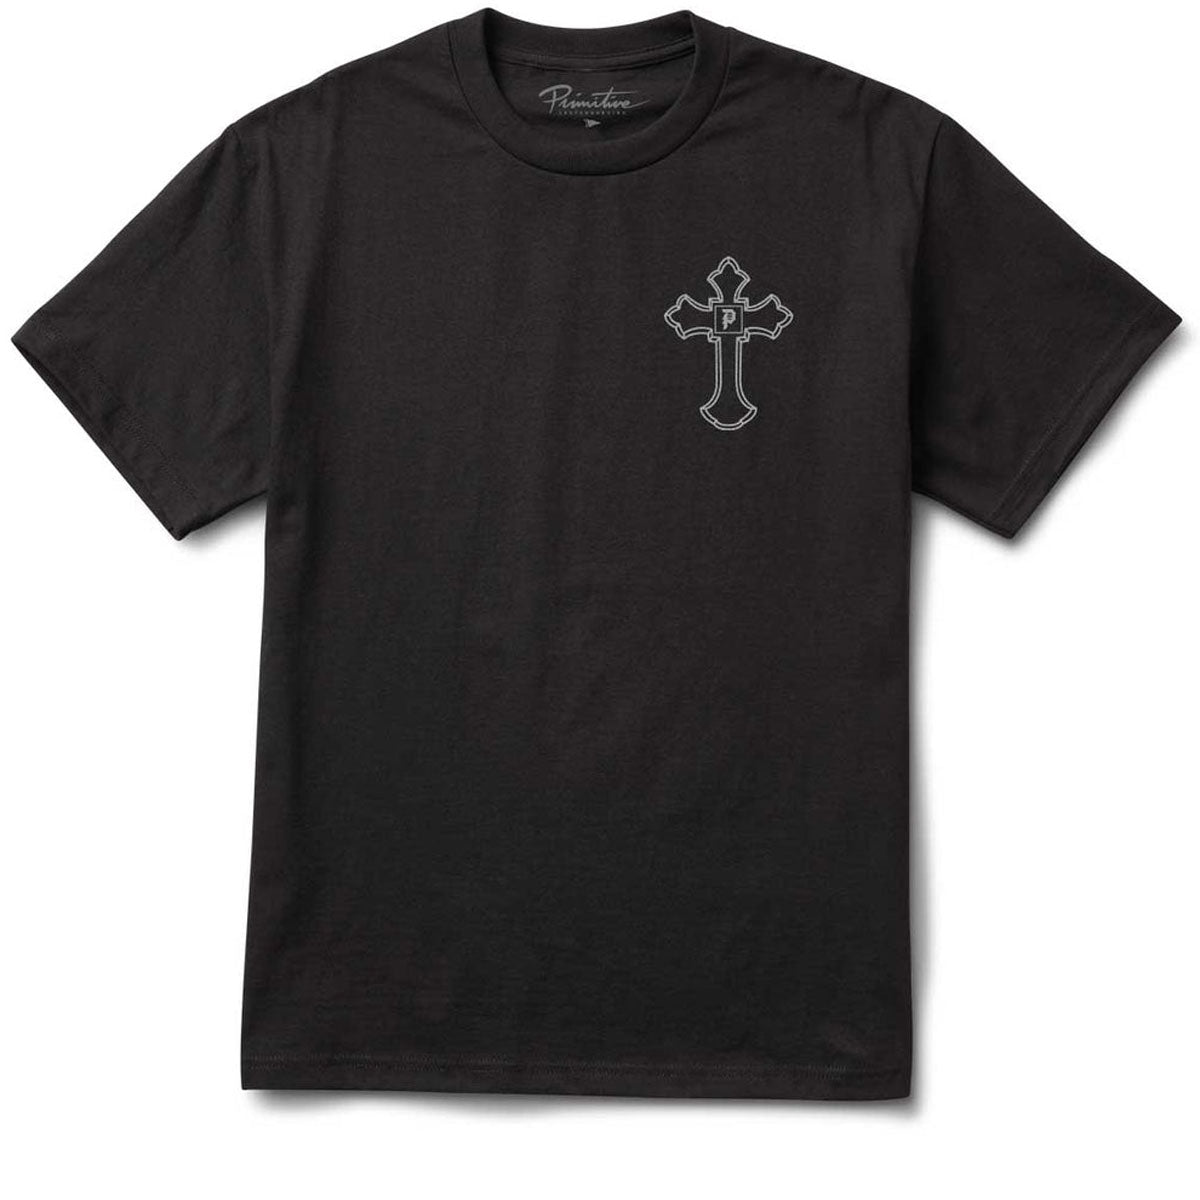 Primitive x Tupac Encore T-Shirt - Black image 2